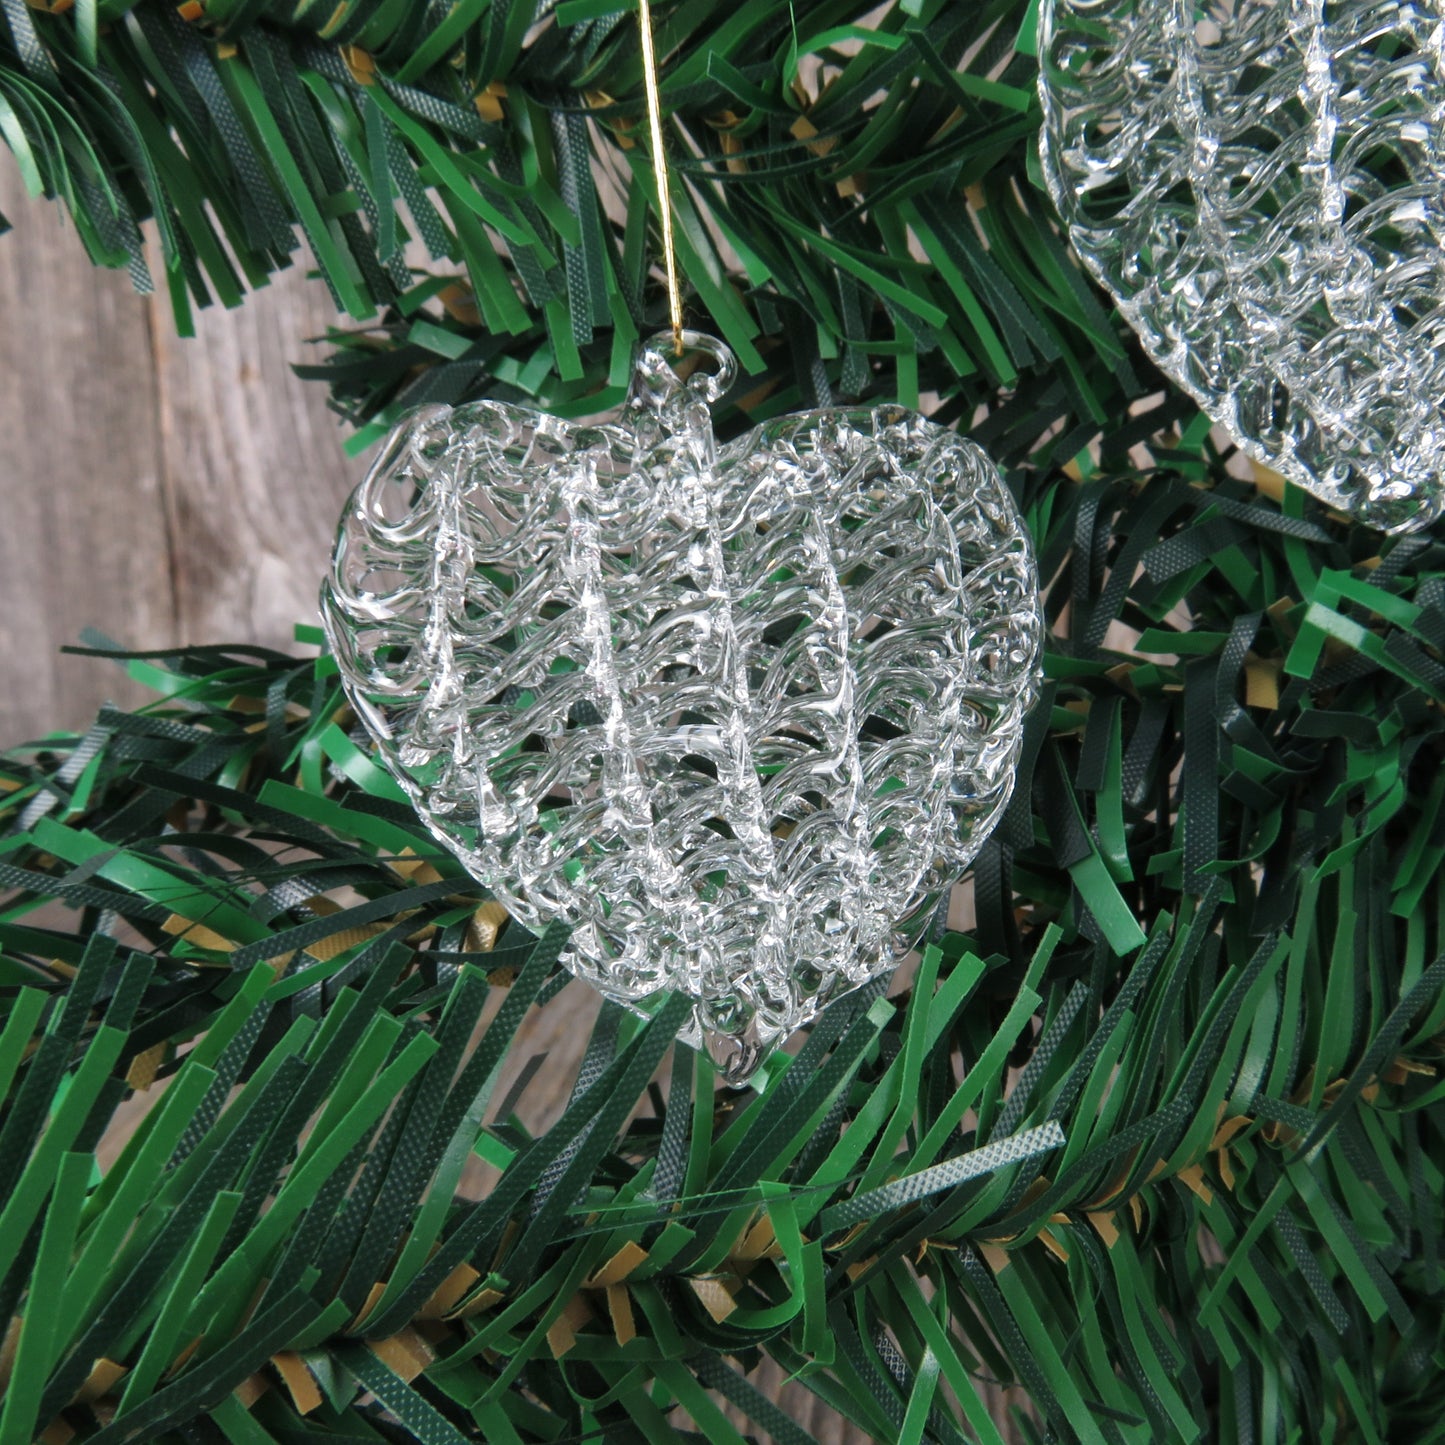 Vintage Heart Spun Glass Ornaments Clear Crystal Christmas Tree Ball Set Lot Vintage Christmas Decoration